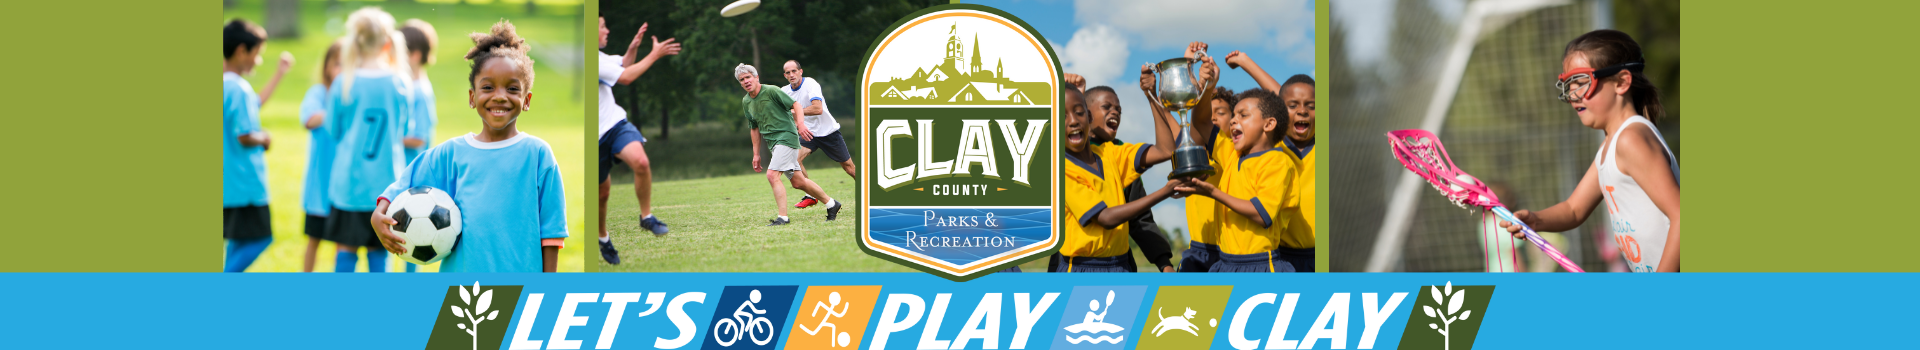 Clay County Regional Park